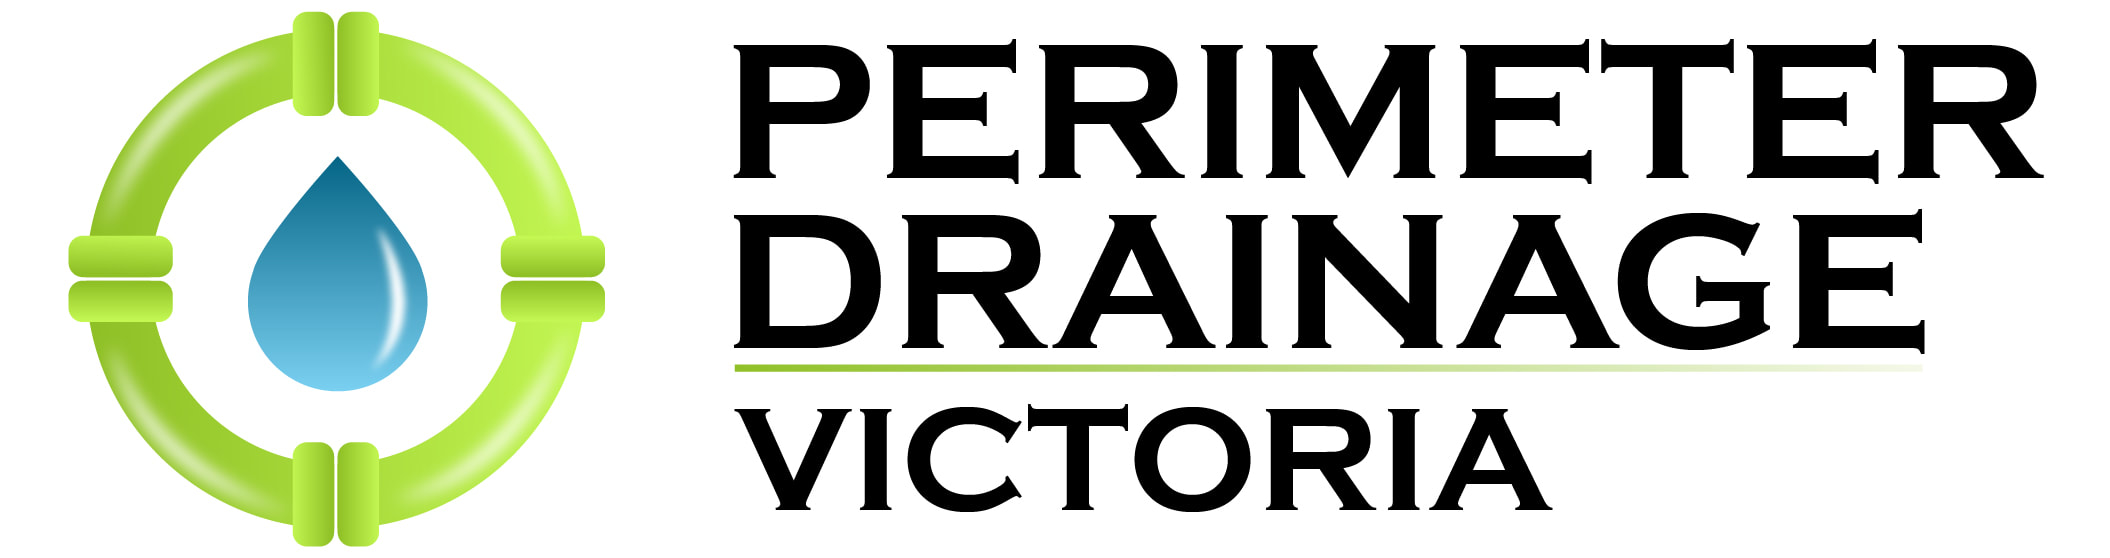 perimeter drainage victoria logo